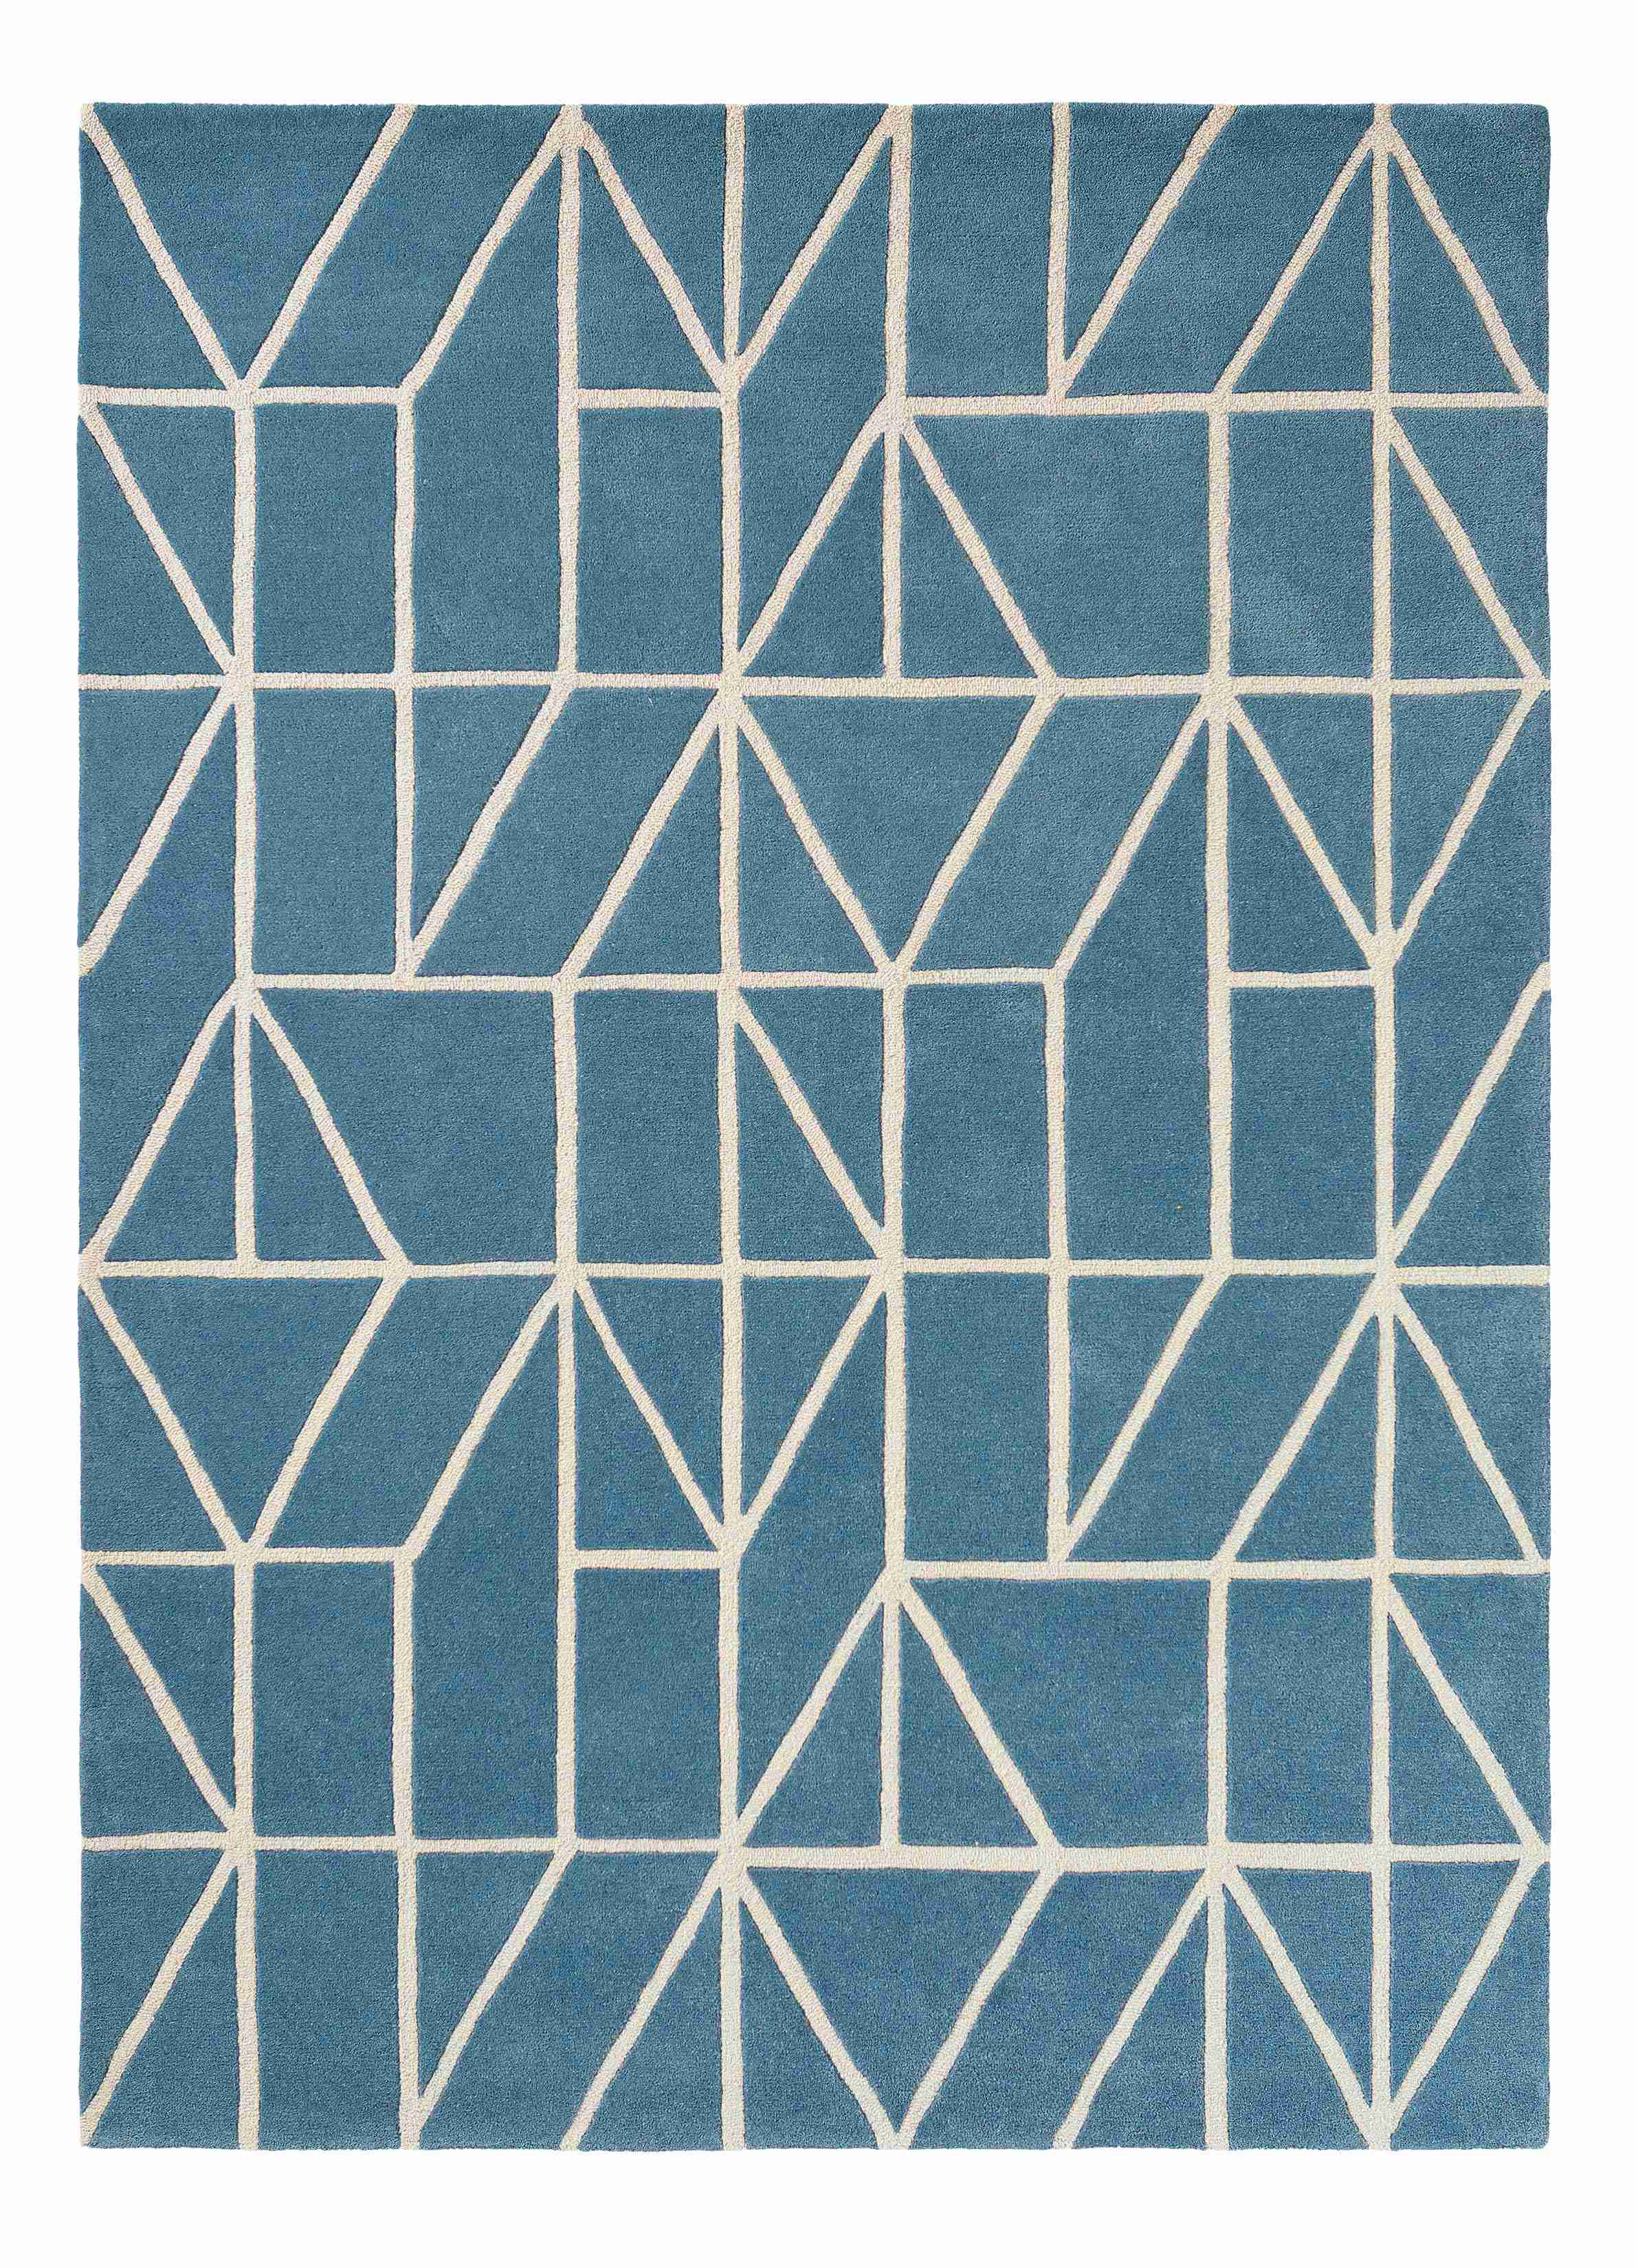 Blue wool rug with white modern geometric line pattern